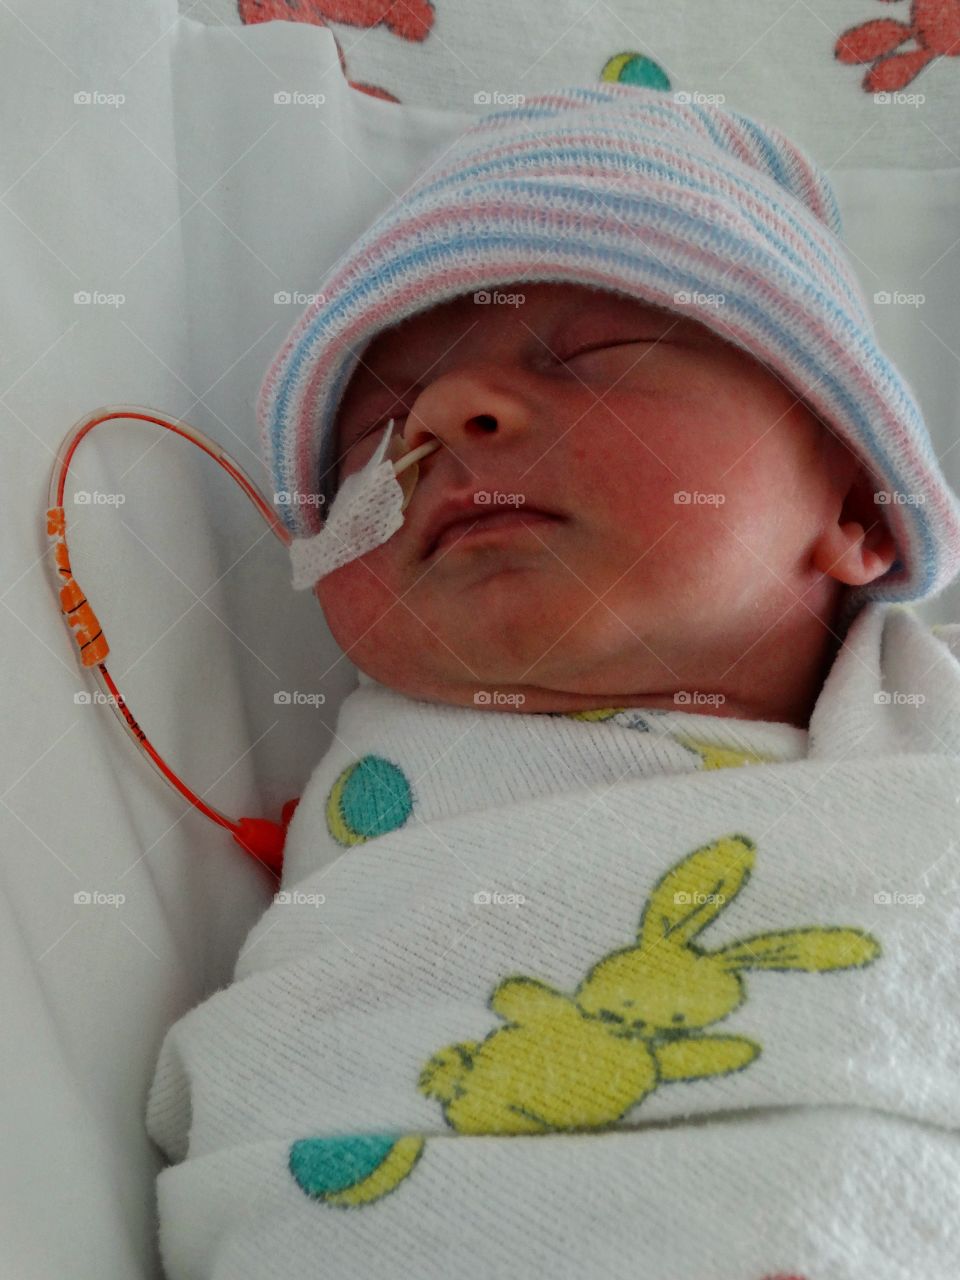 Newborn Premature Infant In Intensive Care
